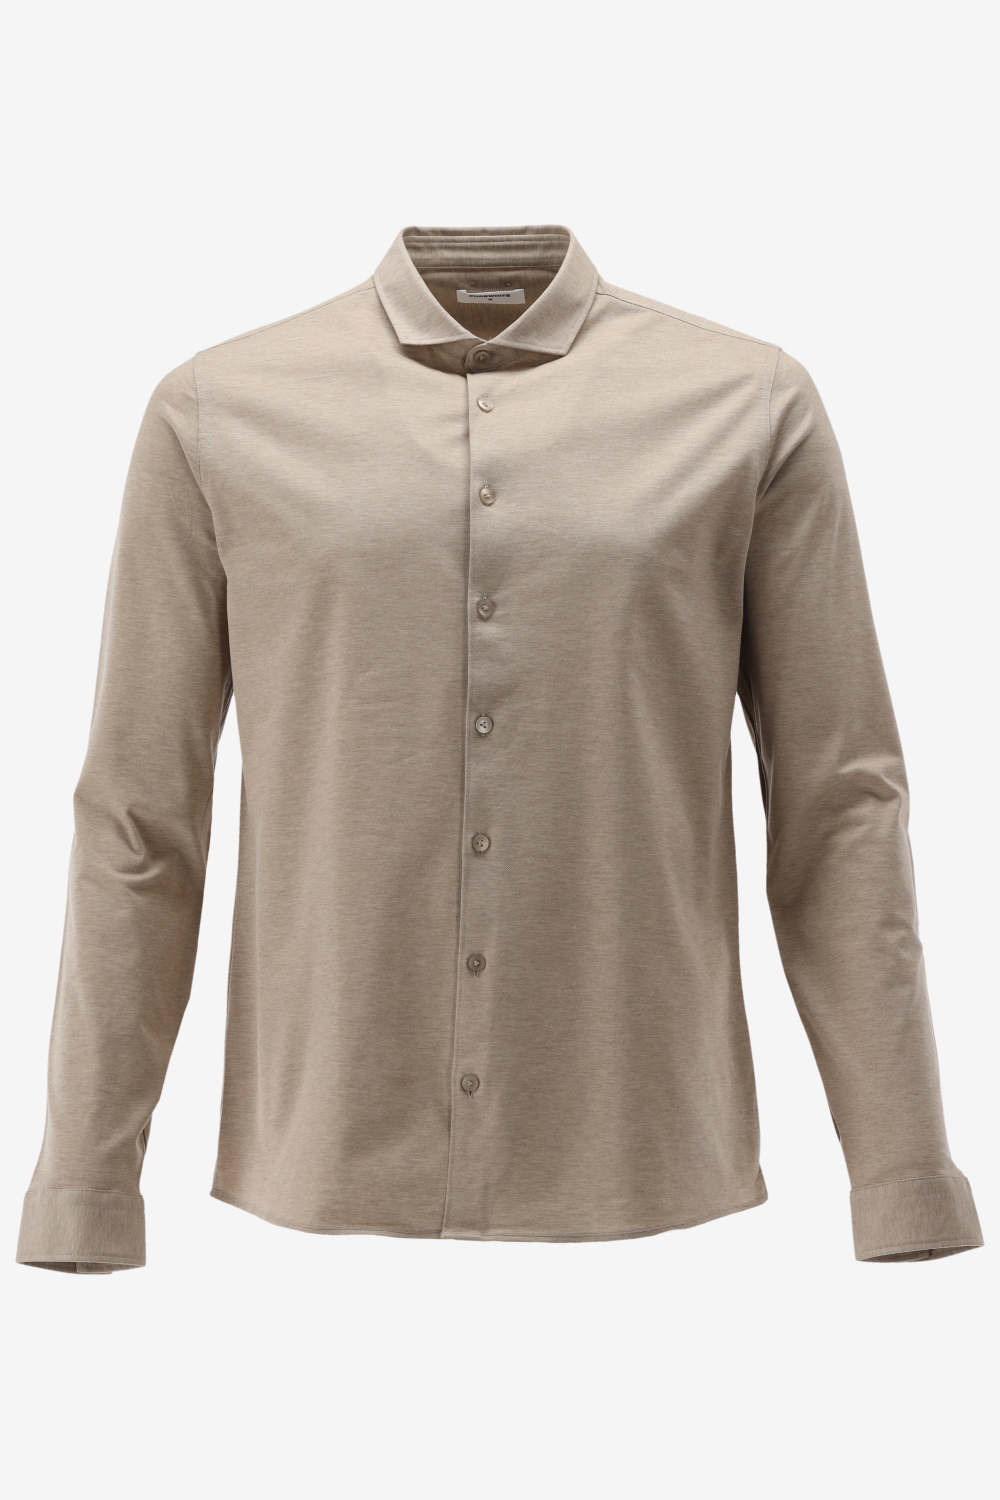 Purewhite - Heren Slim Fit Overhemd - Bruin - Maat L